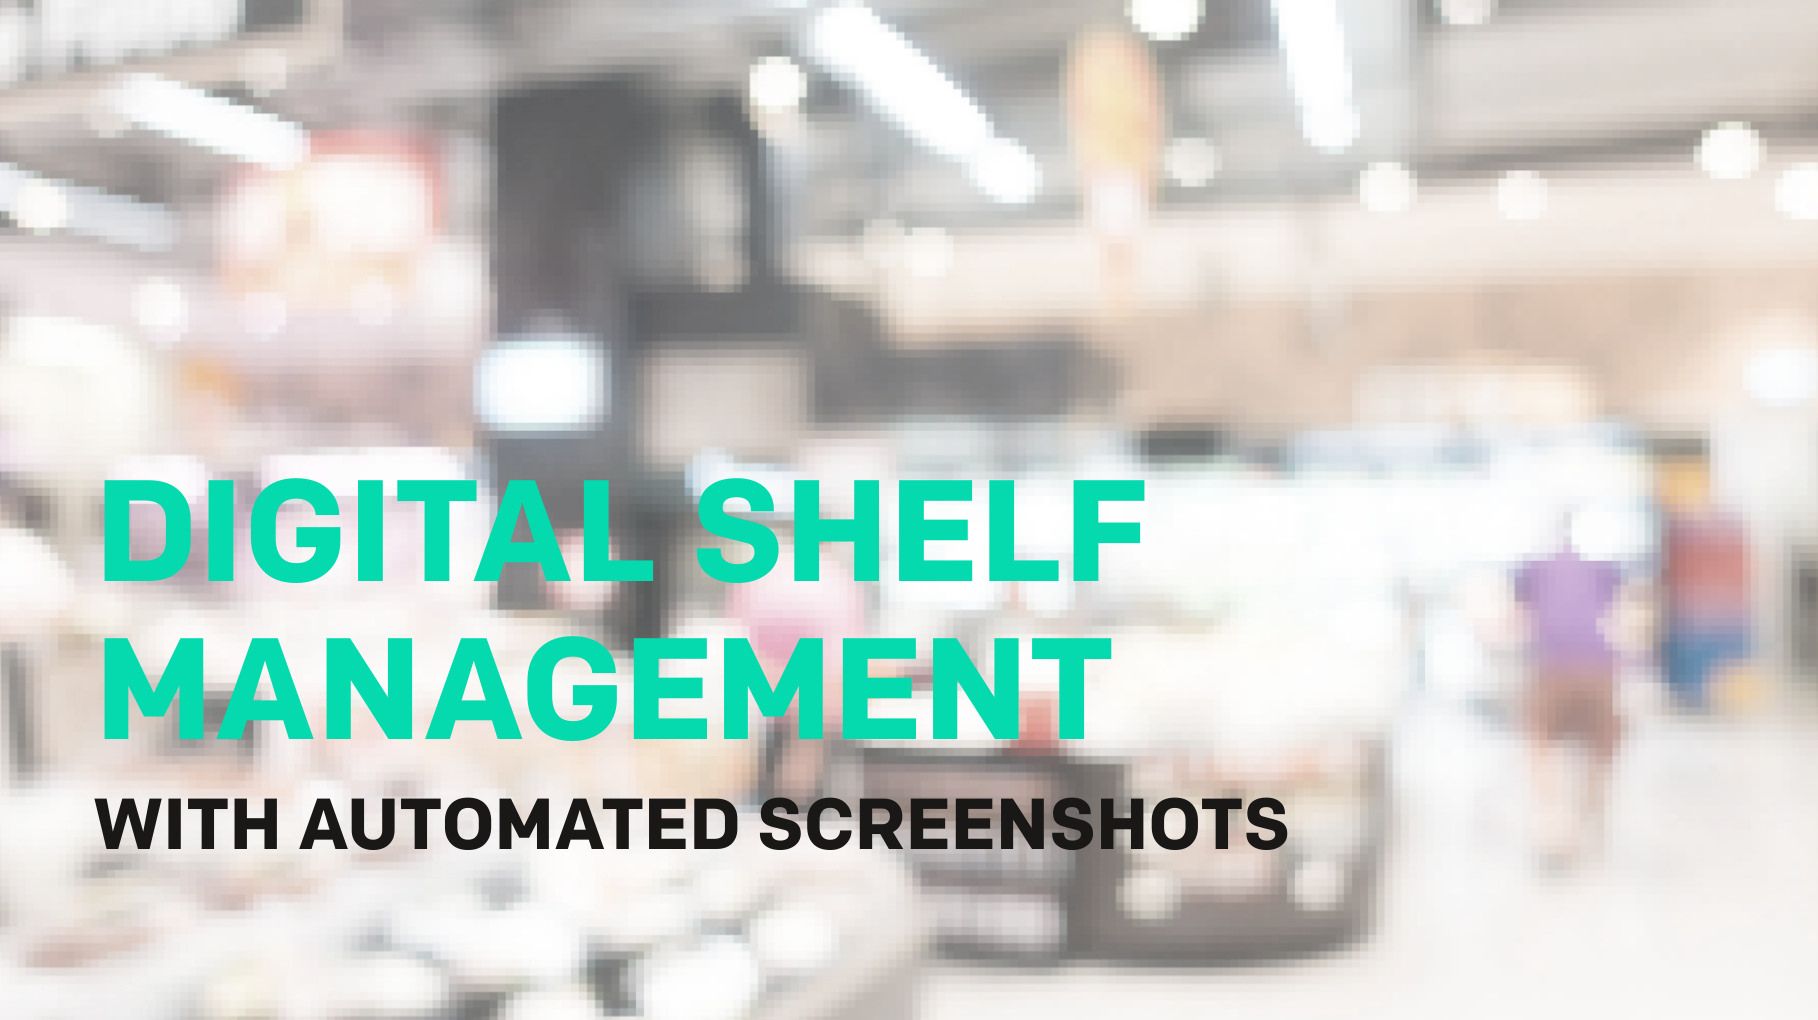 Optimizing digital shelf management with automated screenshots